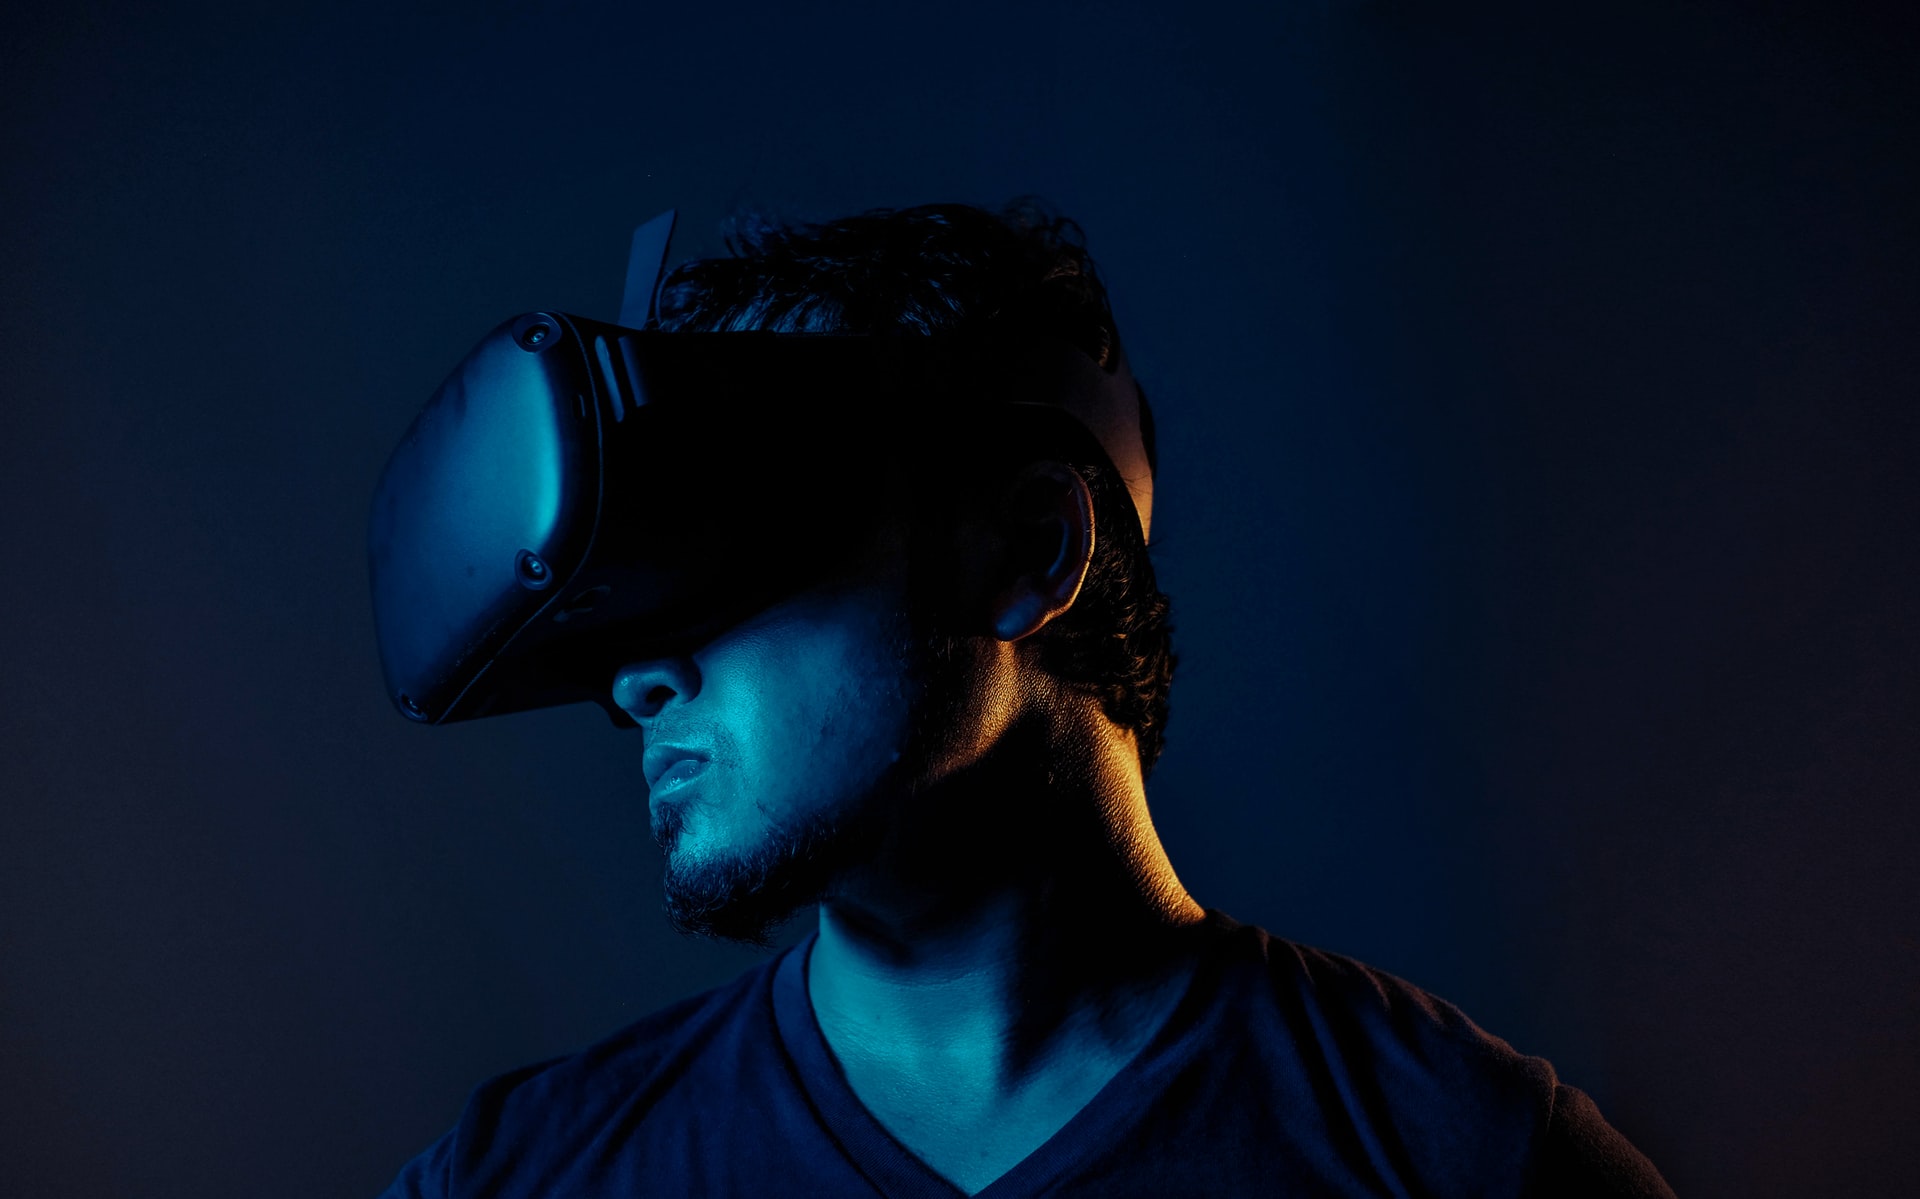 Apple ဟာ သူတို့ရဲ့ပထမဦးဆုံး VR headset ကို ထုတ်လုပ်ရန် ကြိုးပမ်းလျှက်ရှိ